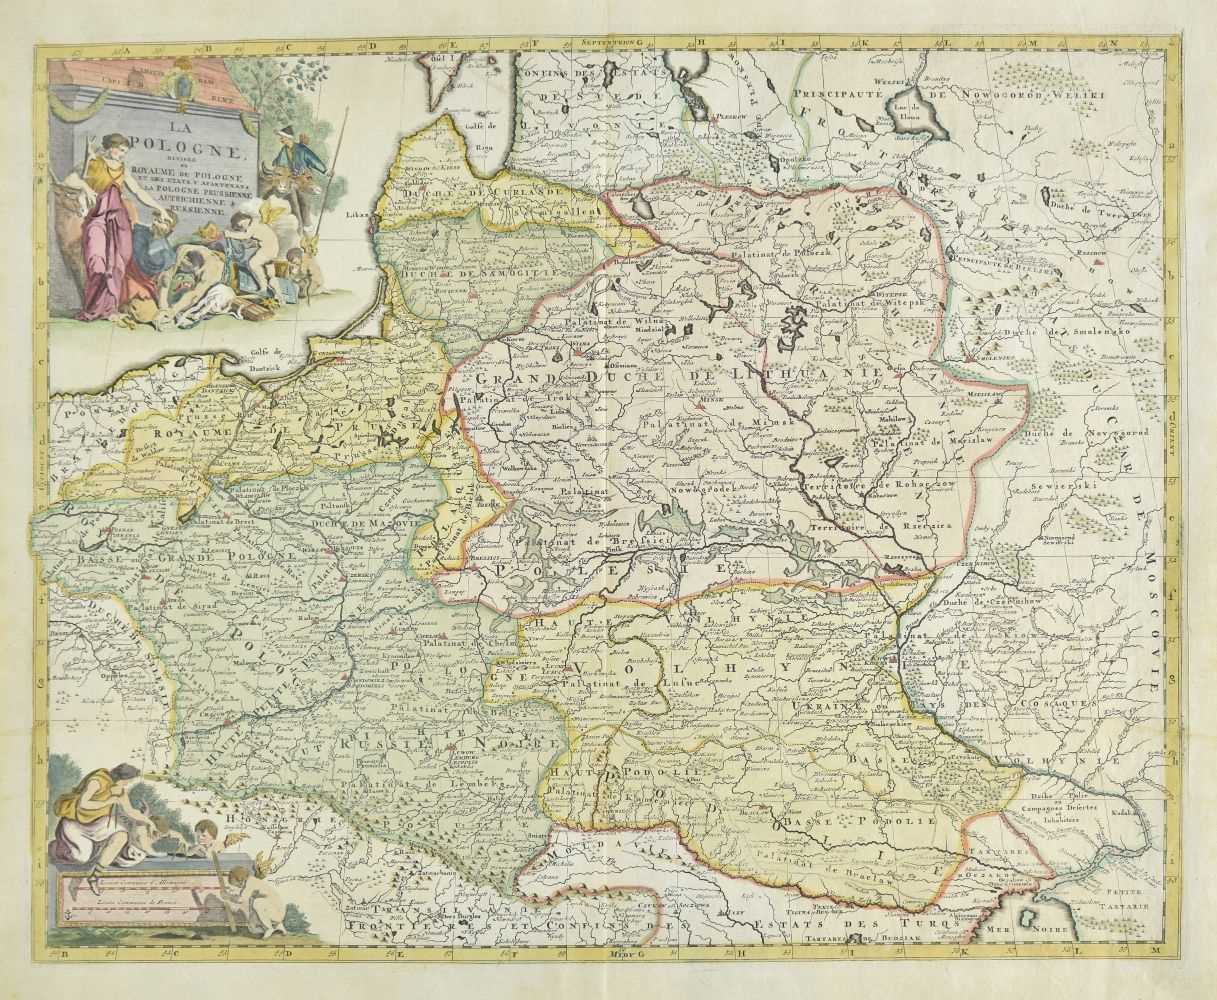 Lot 99 - Poland. Elwe (Jan Barend), La Pologne, [1792]